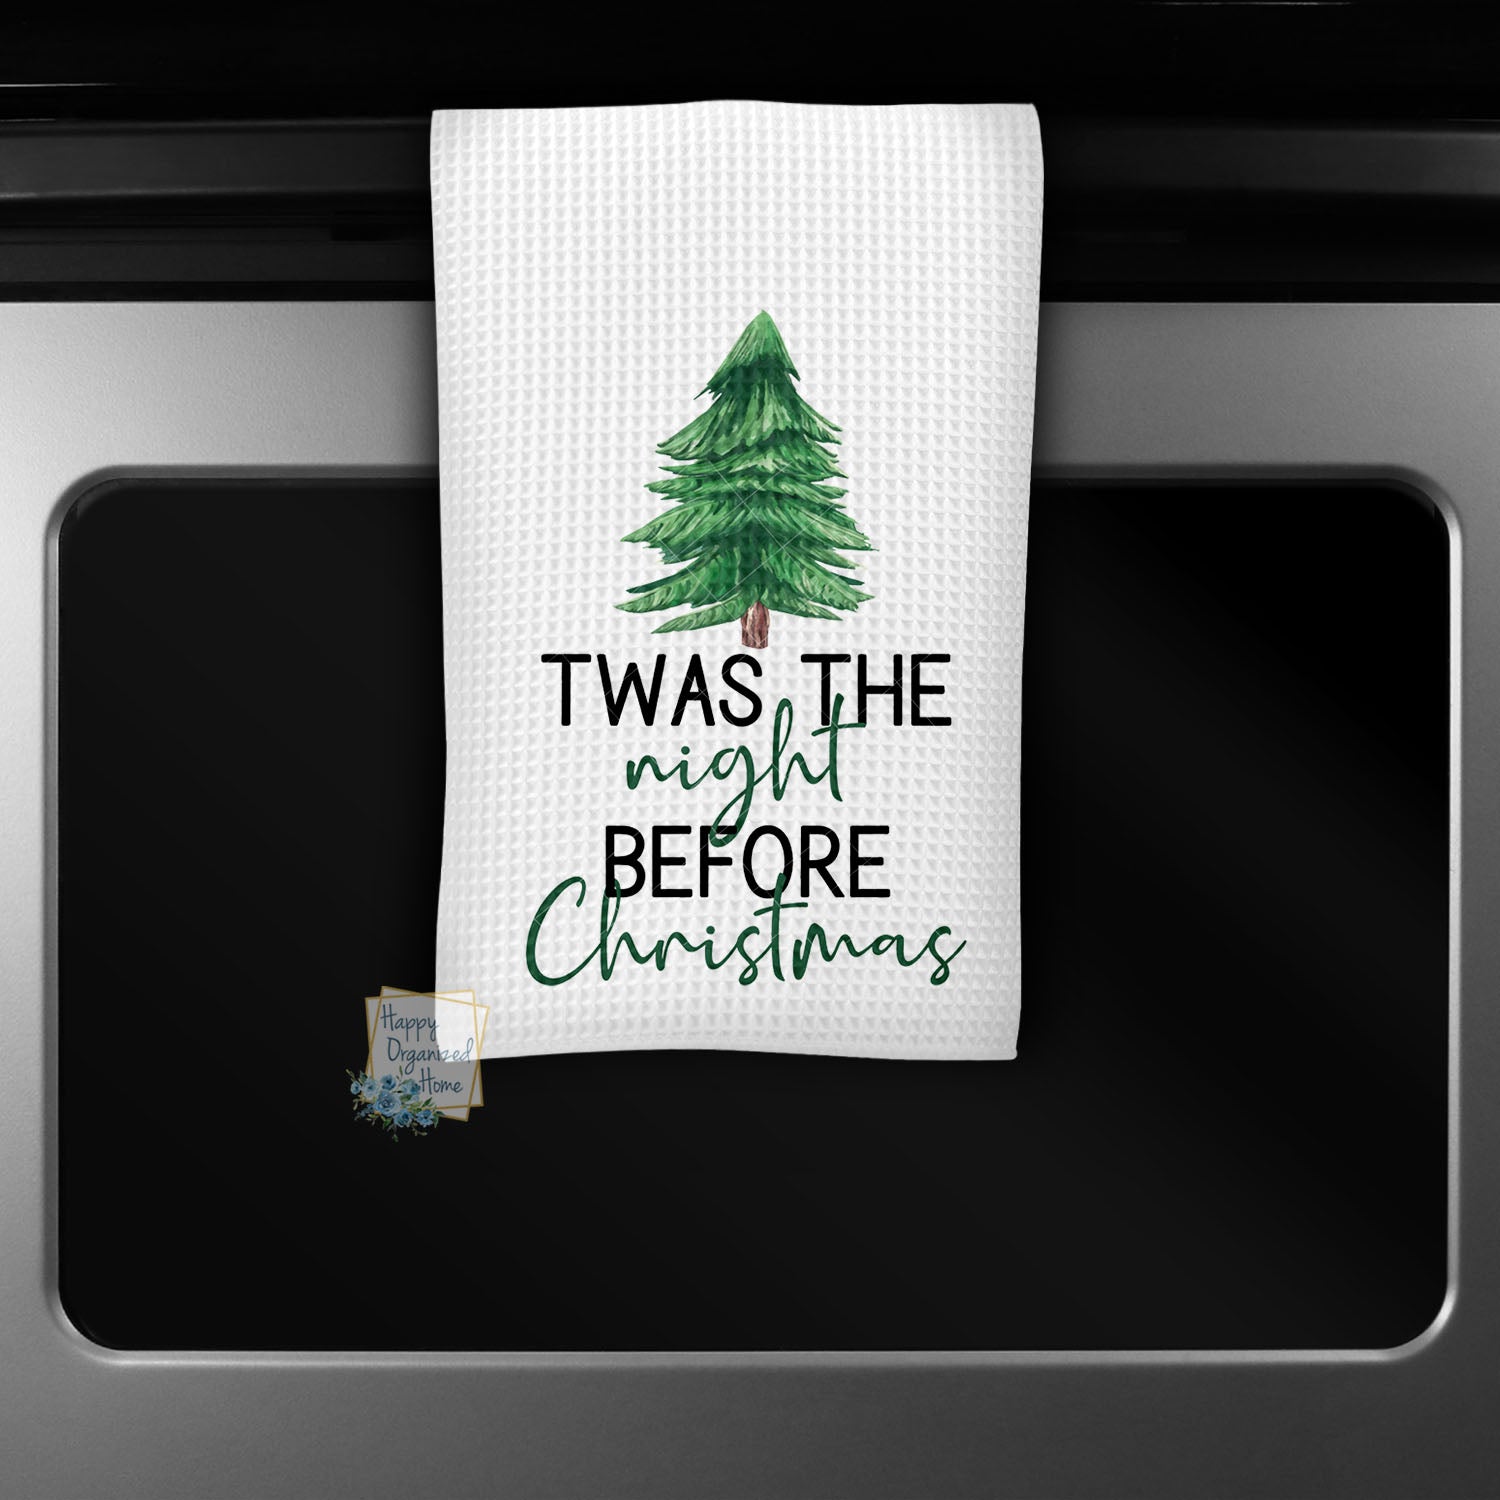 Twas the night before Christmas - Kitchen Towel Tea towel Printed Kitchen Towel